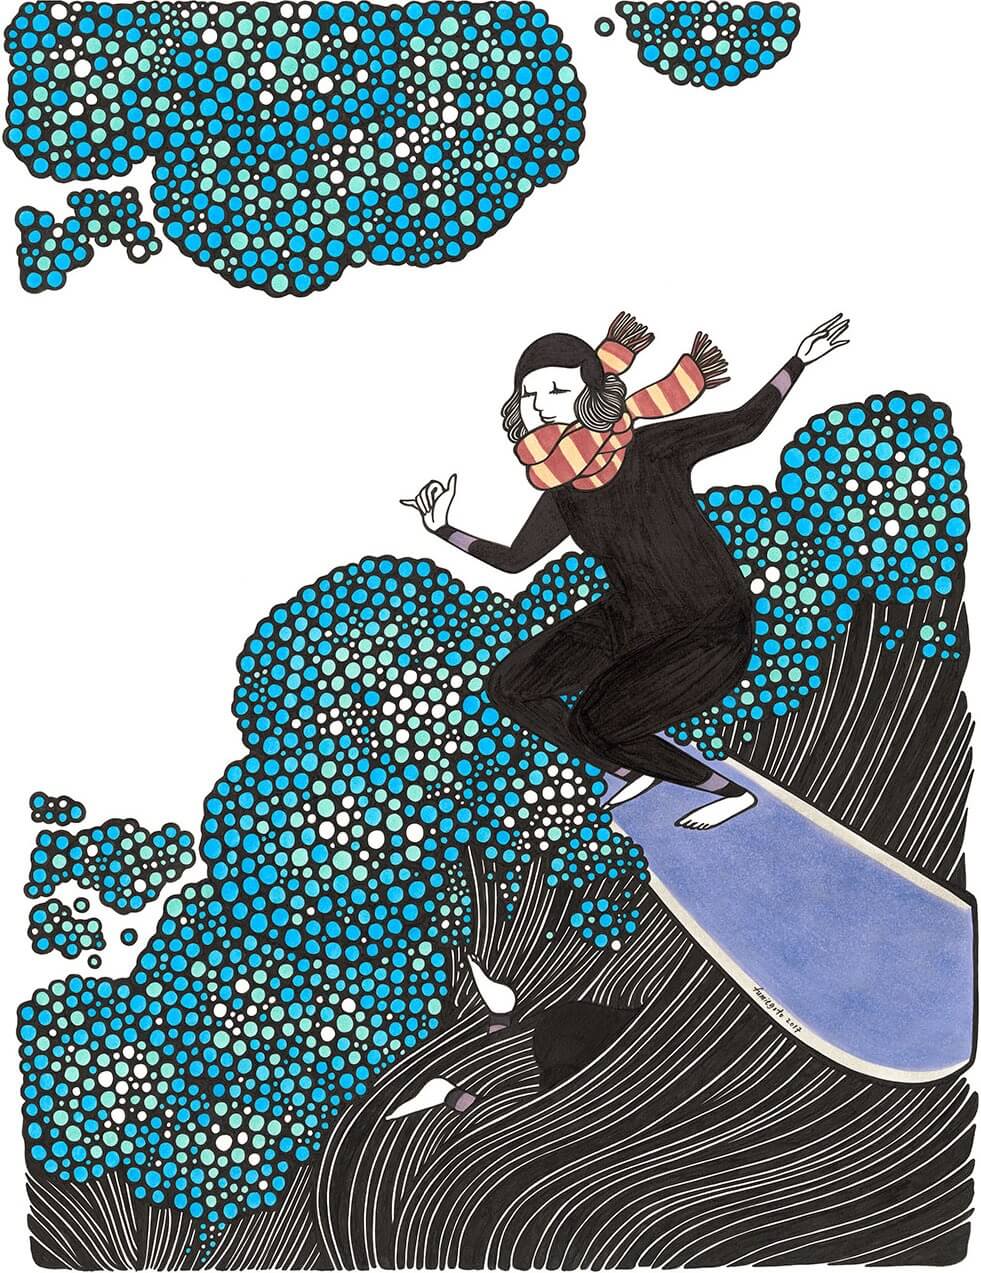 Surfer illustration by Kris Goto